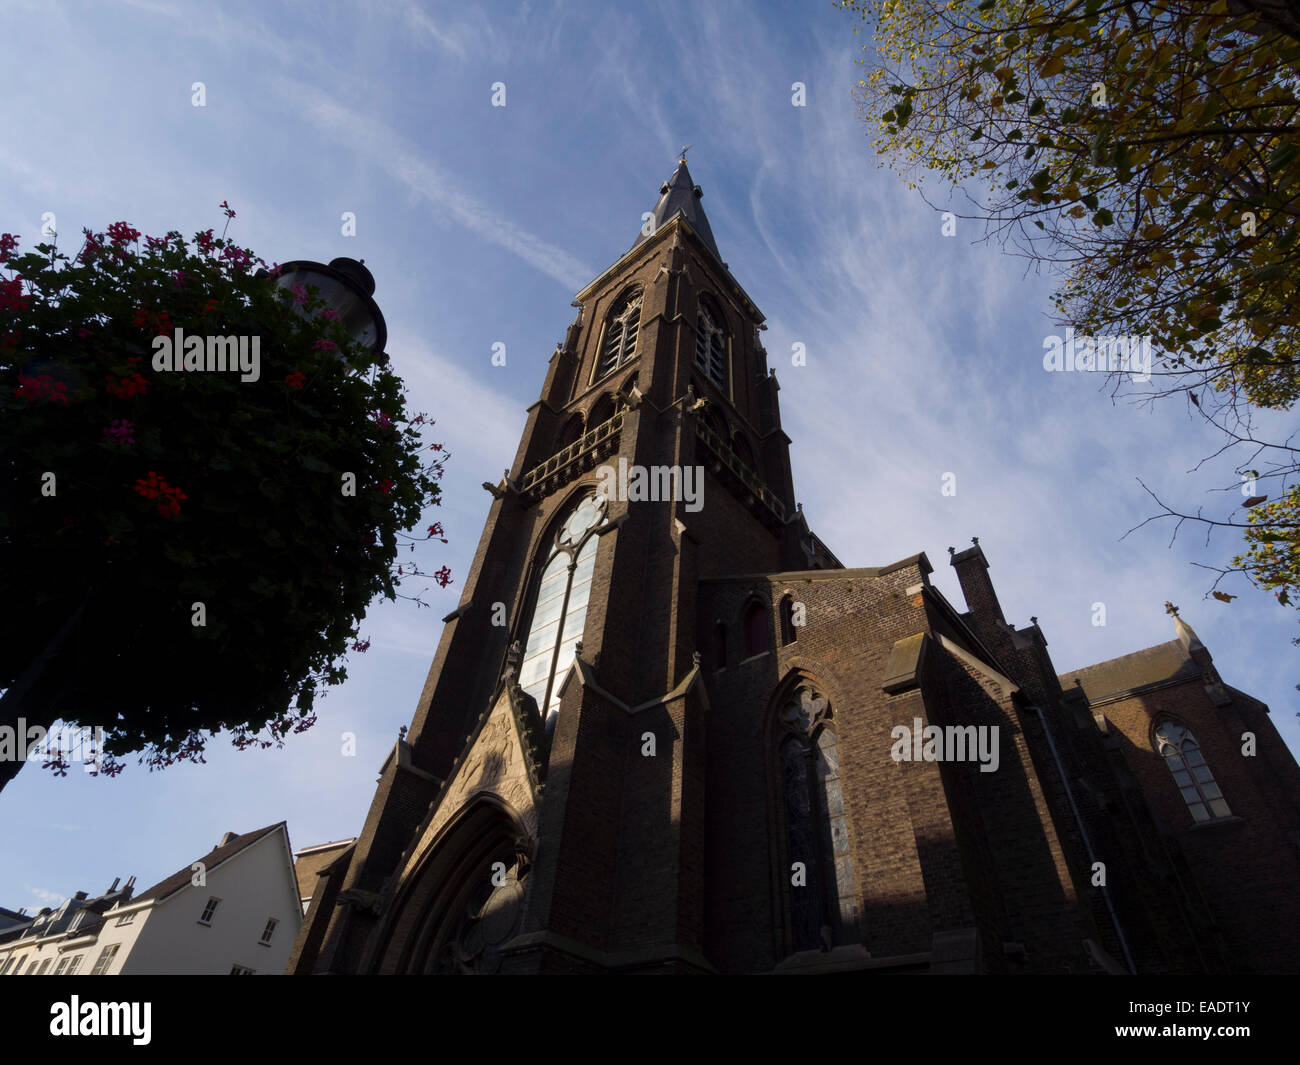 St. Martinus neo-gothic church in Maastricht, The Netherlands, Europe Stock Photo